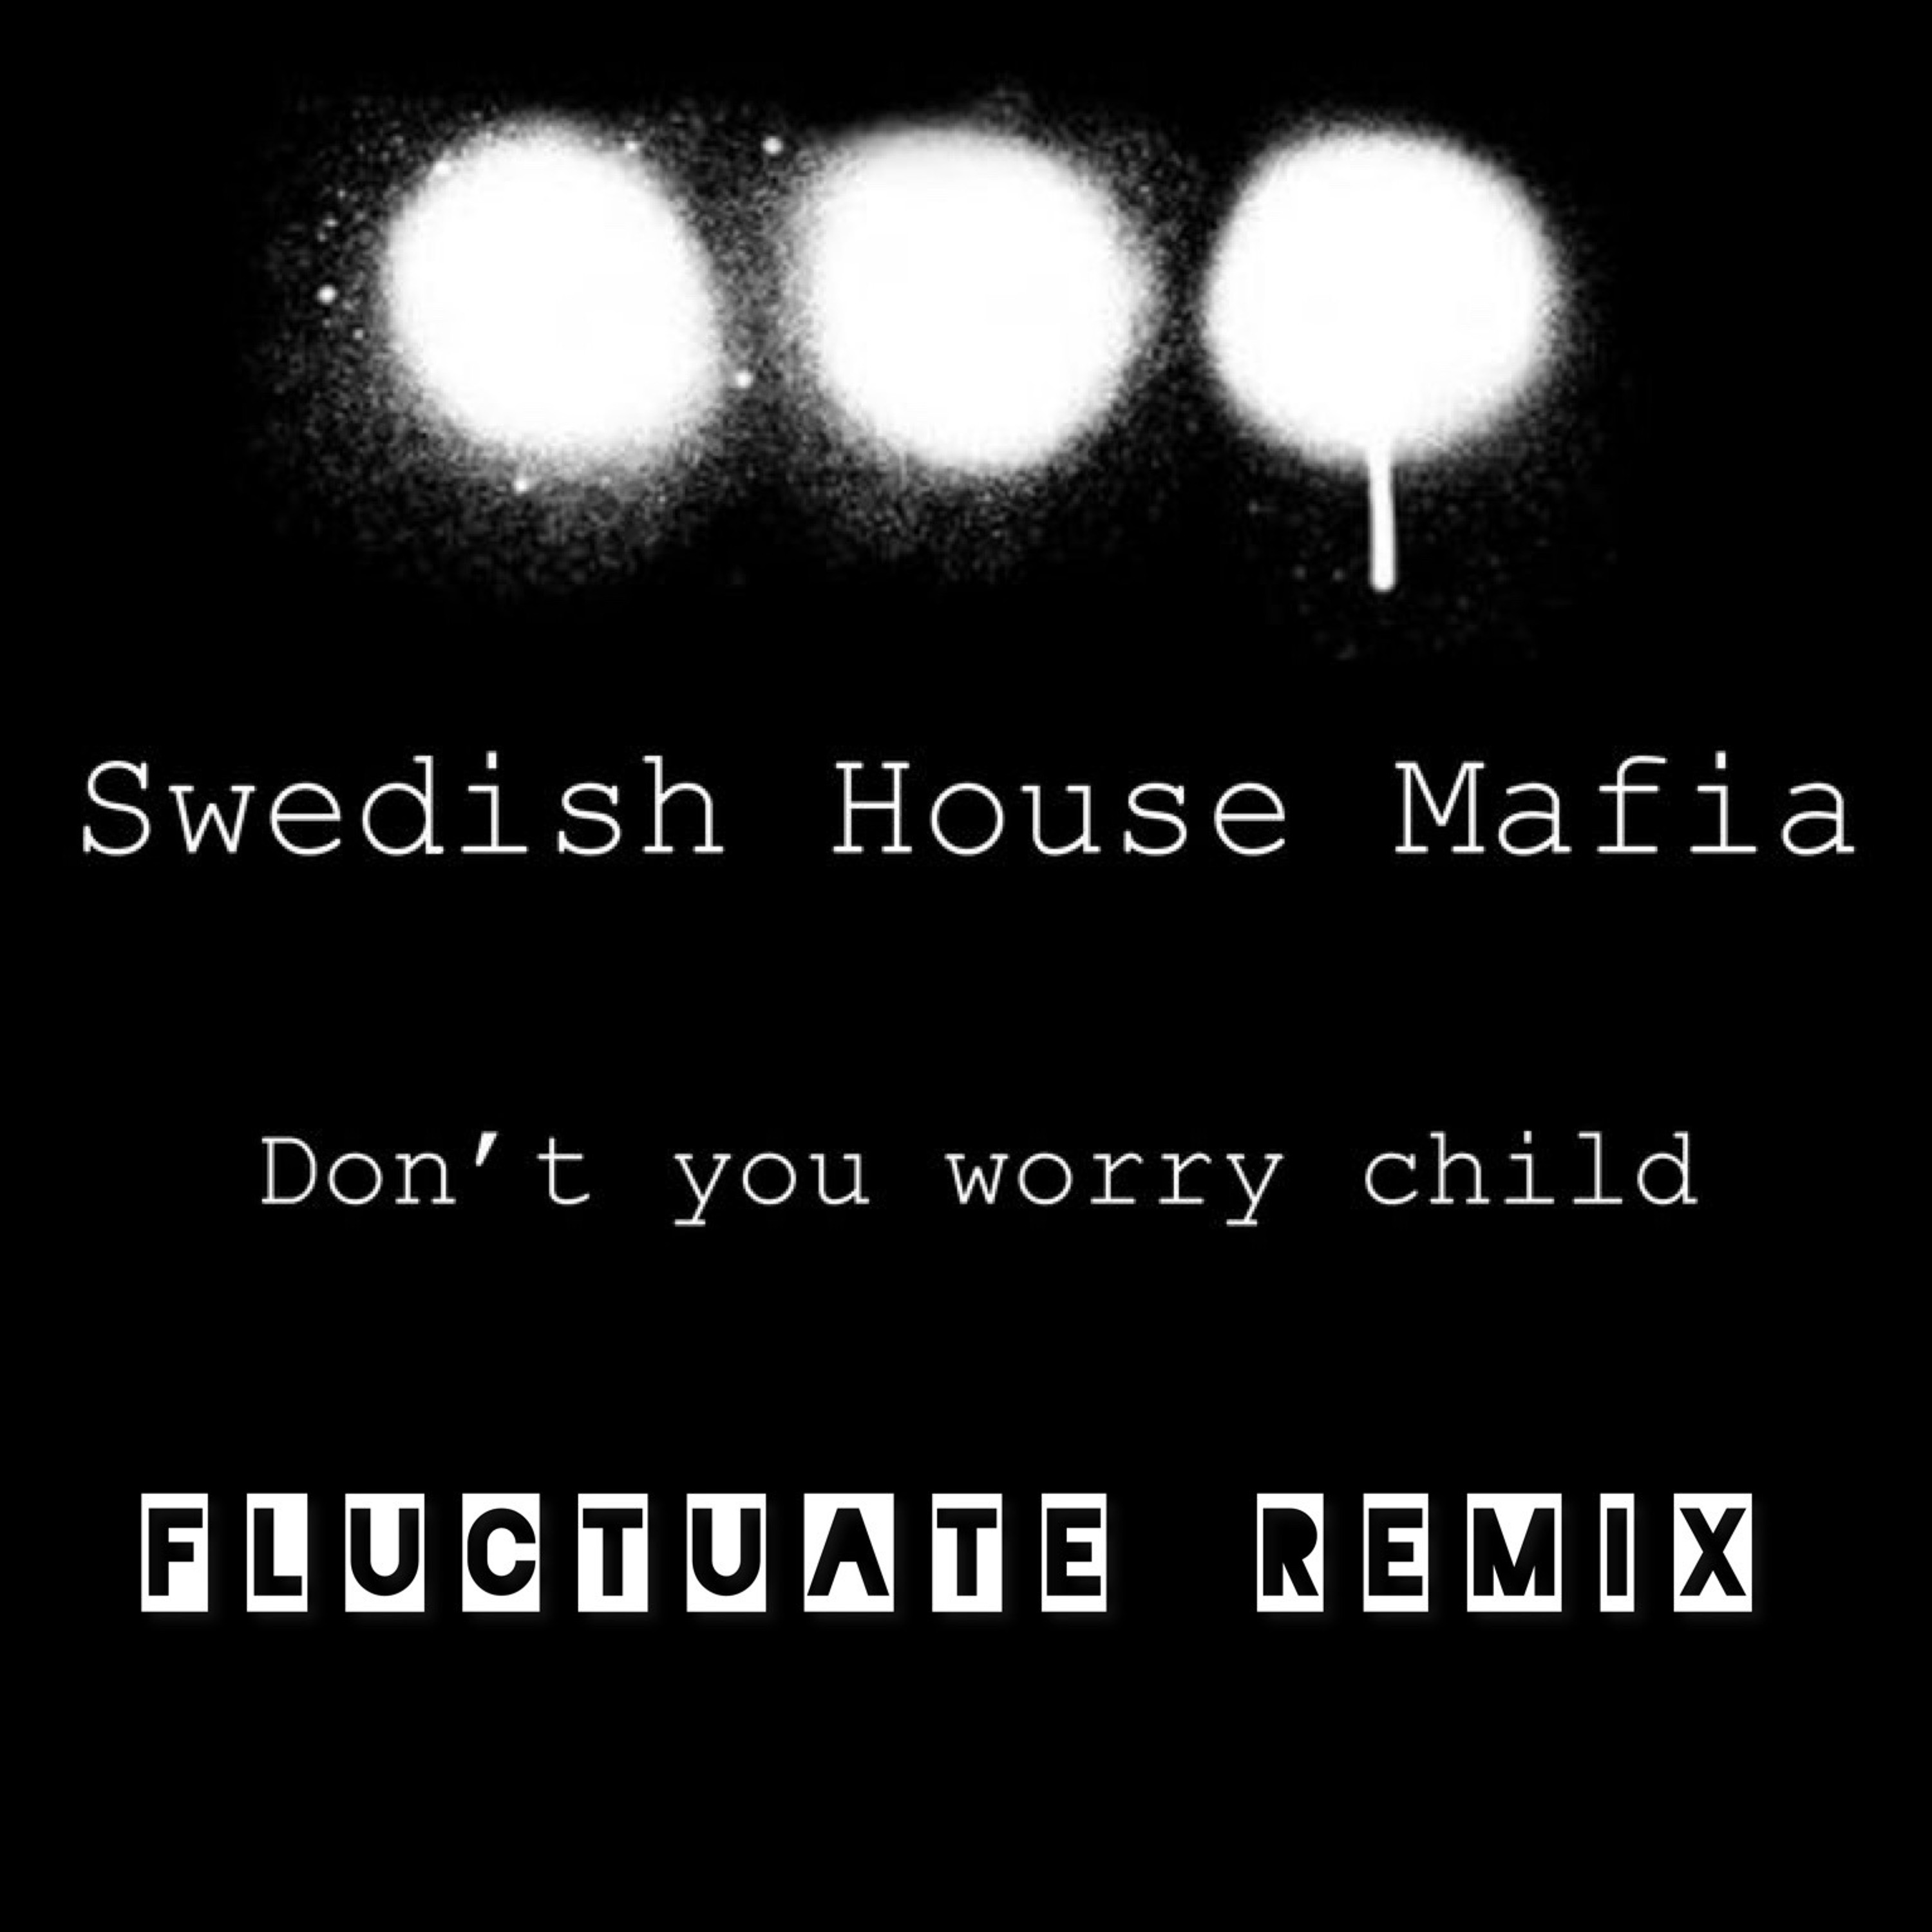 Swedish House Mafia - Don't You Worry Child [Fluctuate remix] Artwork